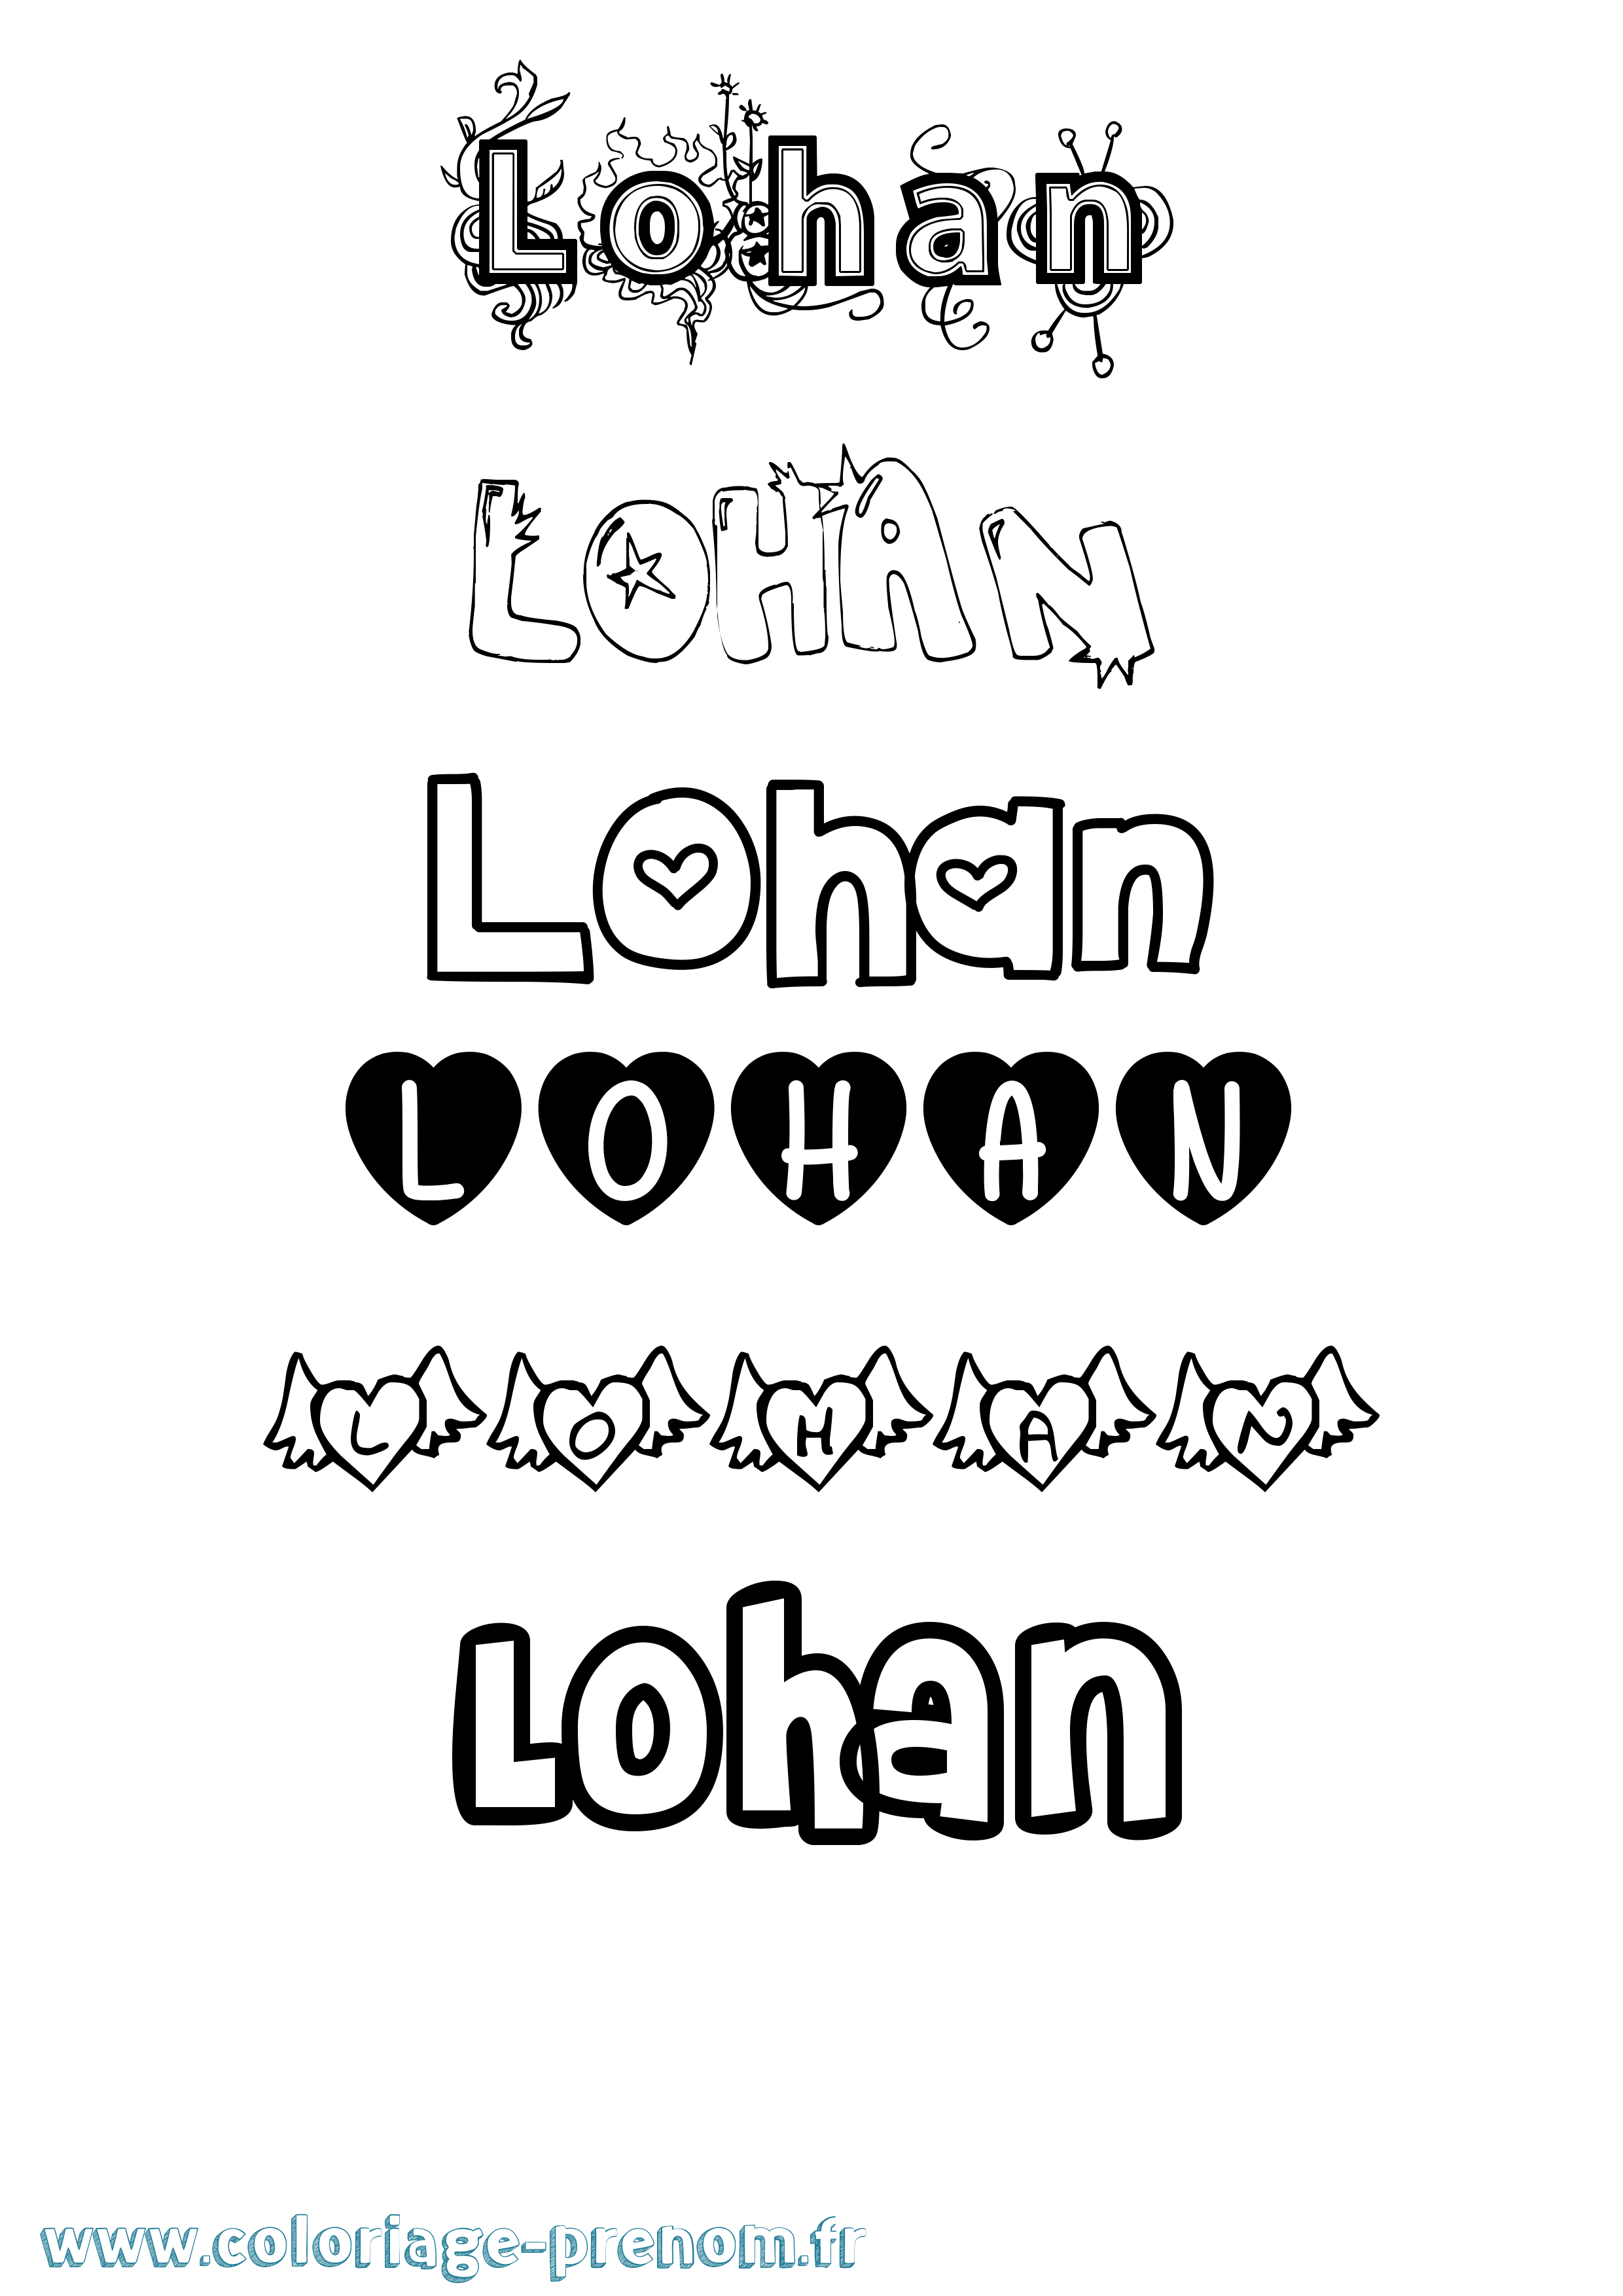 Coloriage prénom Lohan